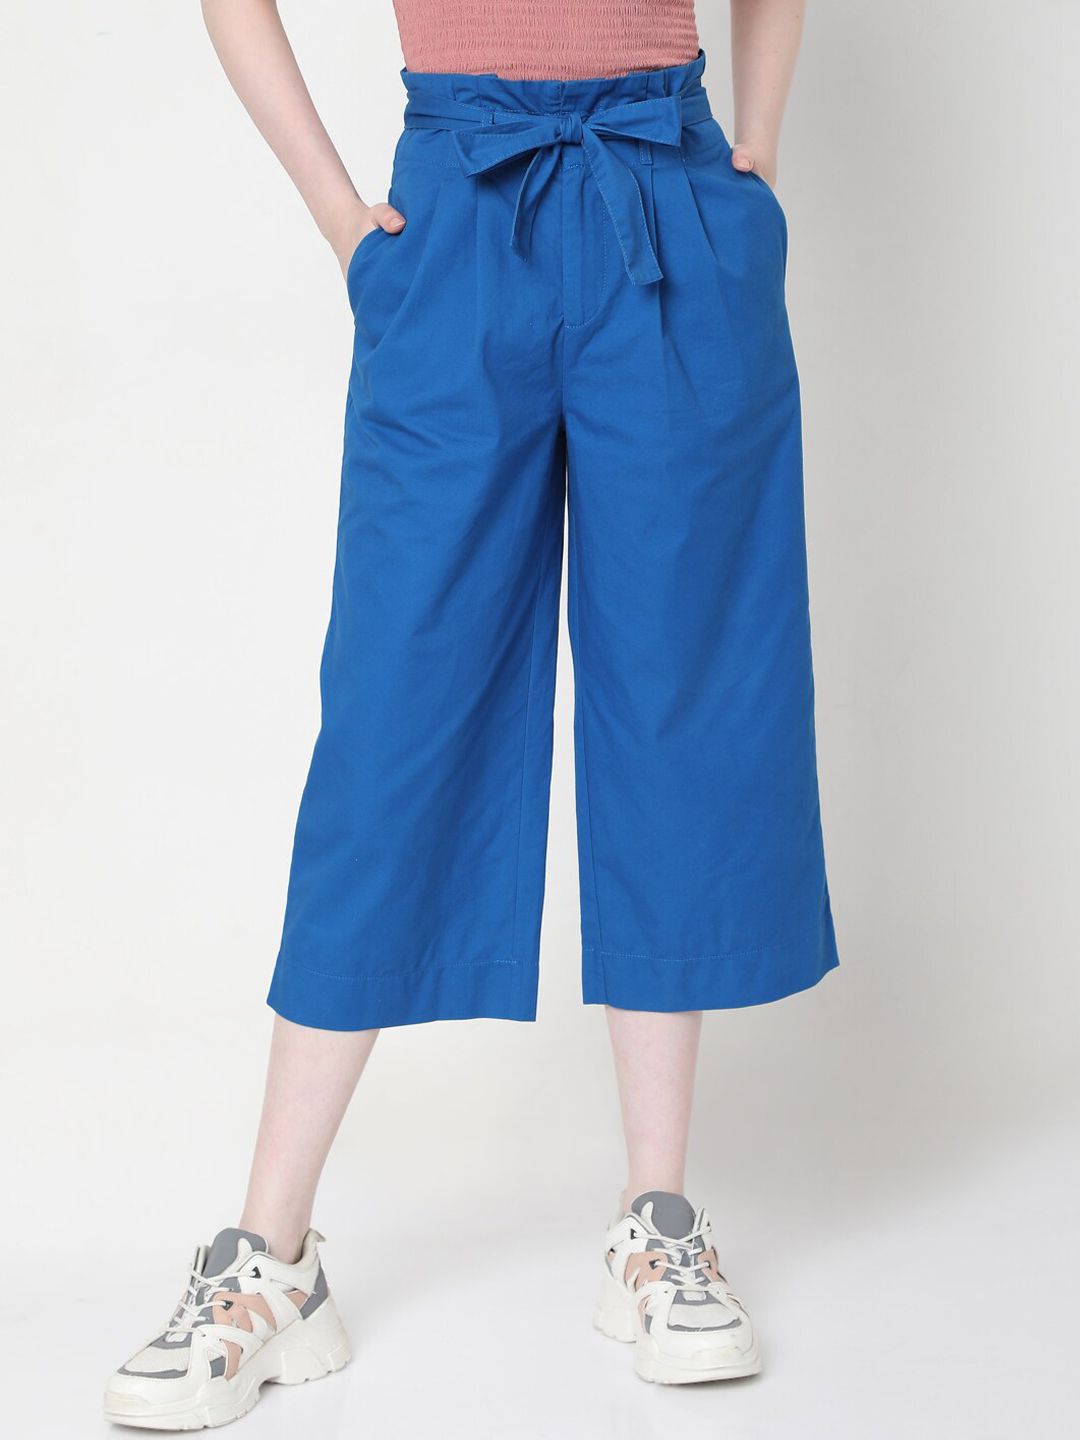 Vero Moda Women Blue Pleated Cotton Culottes With Belt Price in India